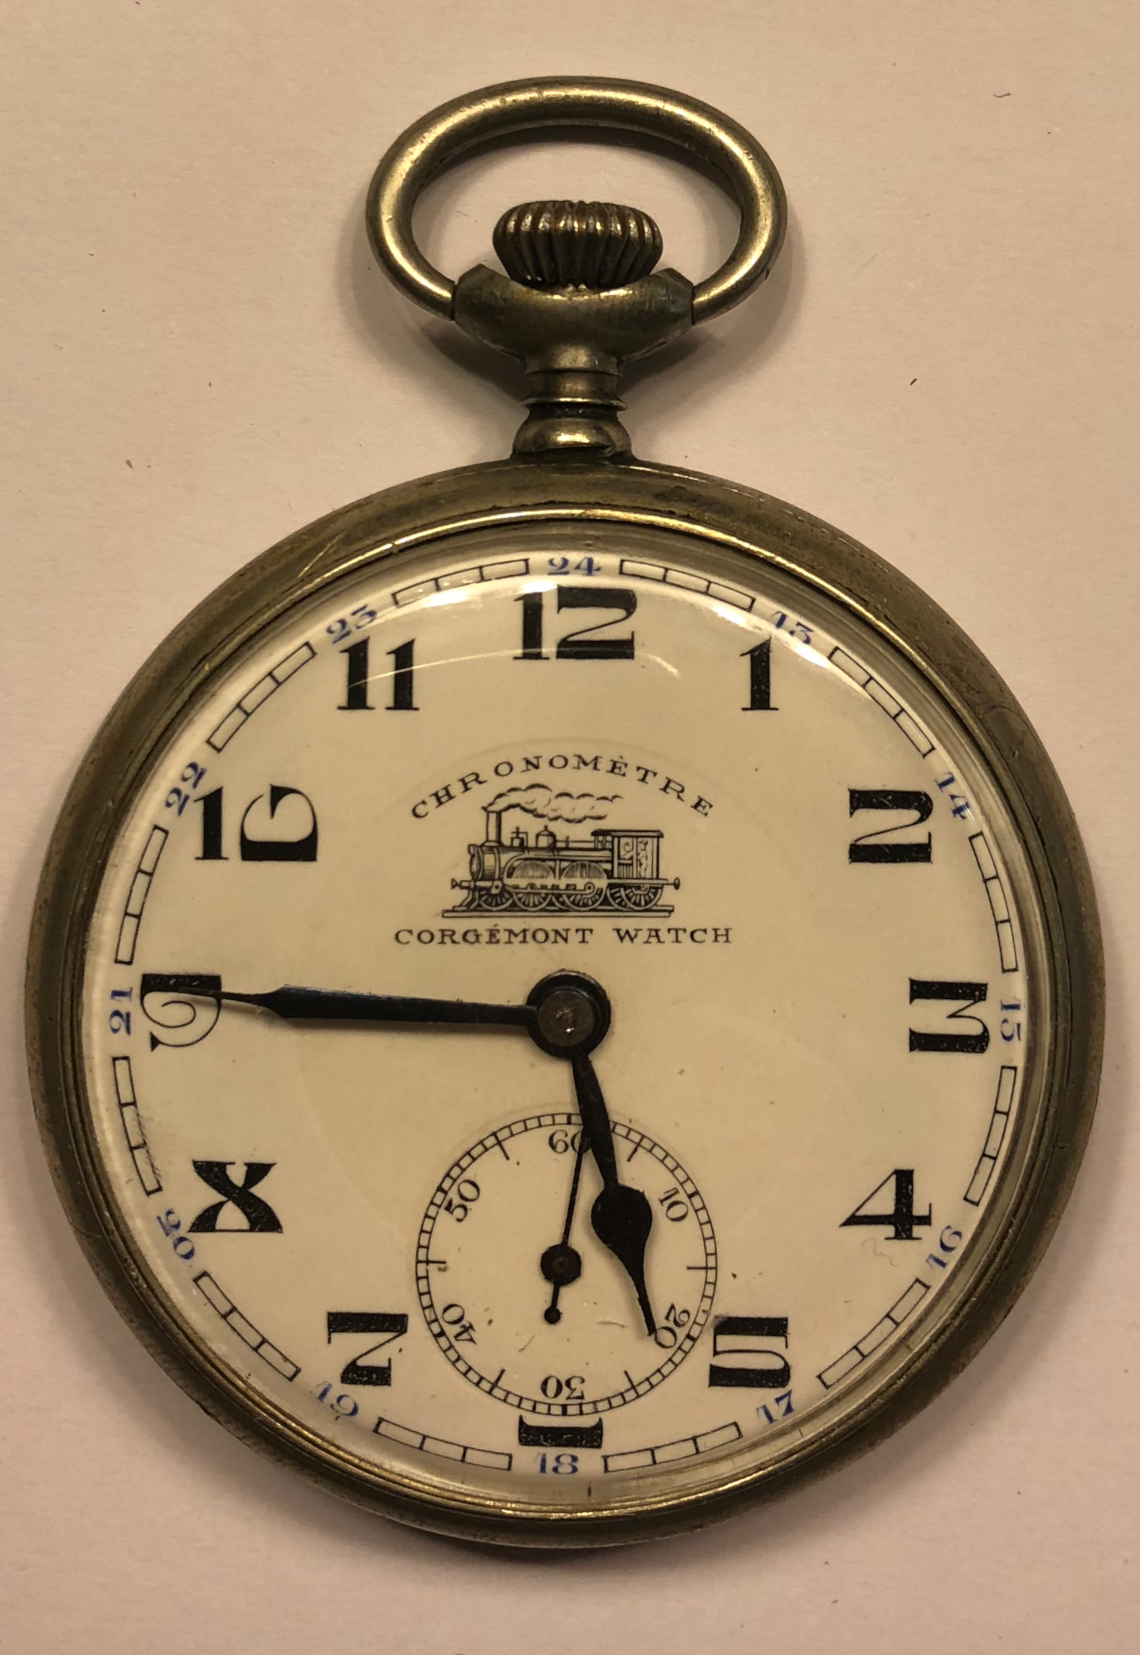 Reloj estilo lepine para ferroviario de la marca CORGÉMONT, Suiza. Cronómetro alta precisión. | Museo Internacional de Alta Relojería de Bolsillo